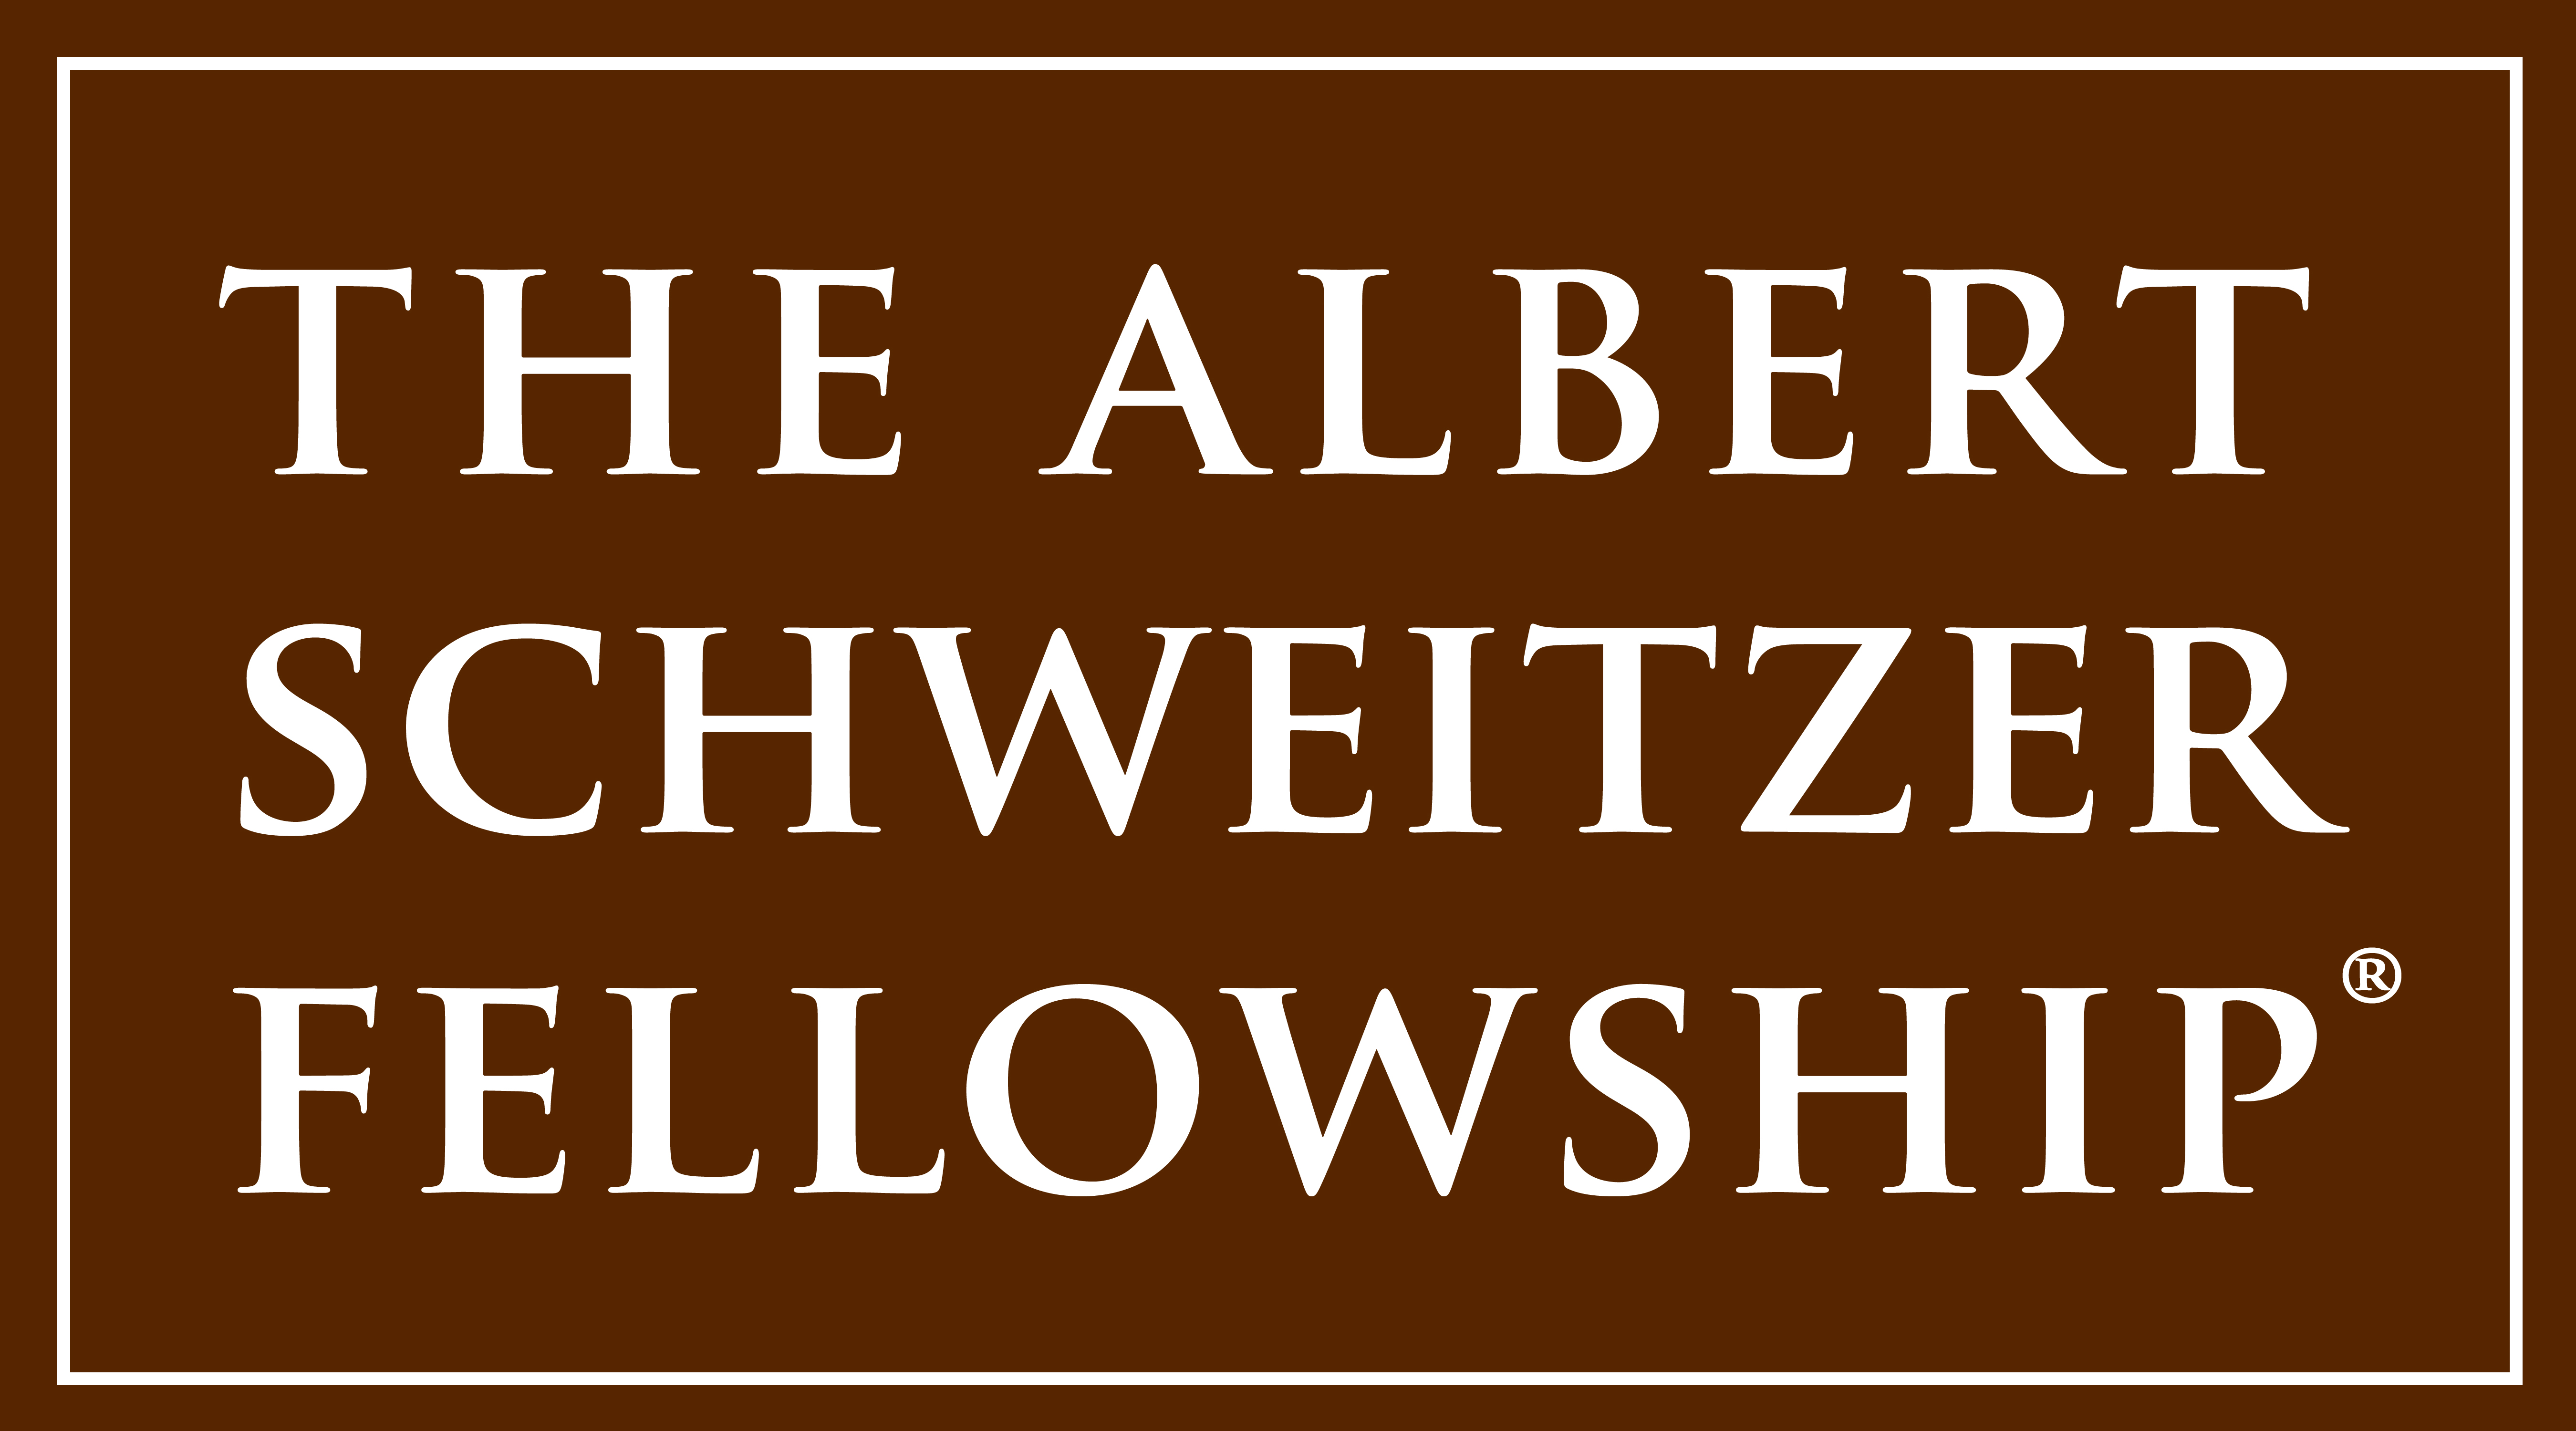 The Albert Schweitzer Fellowship of Alabama